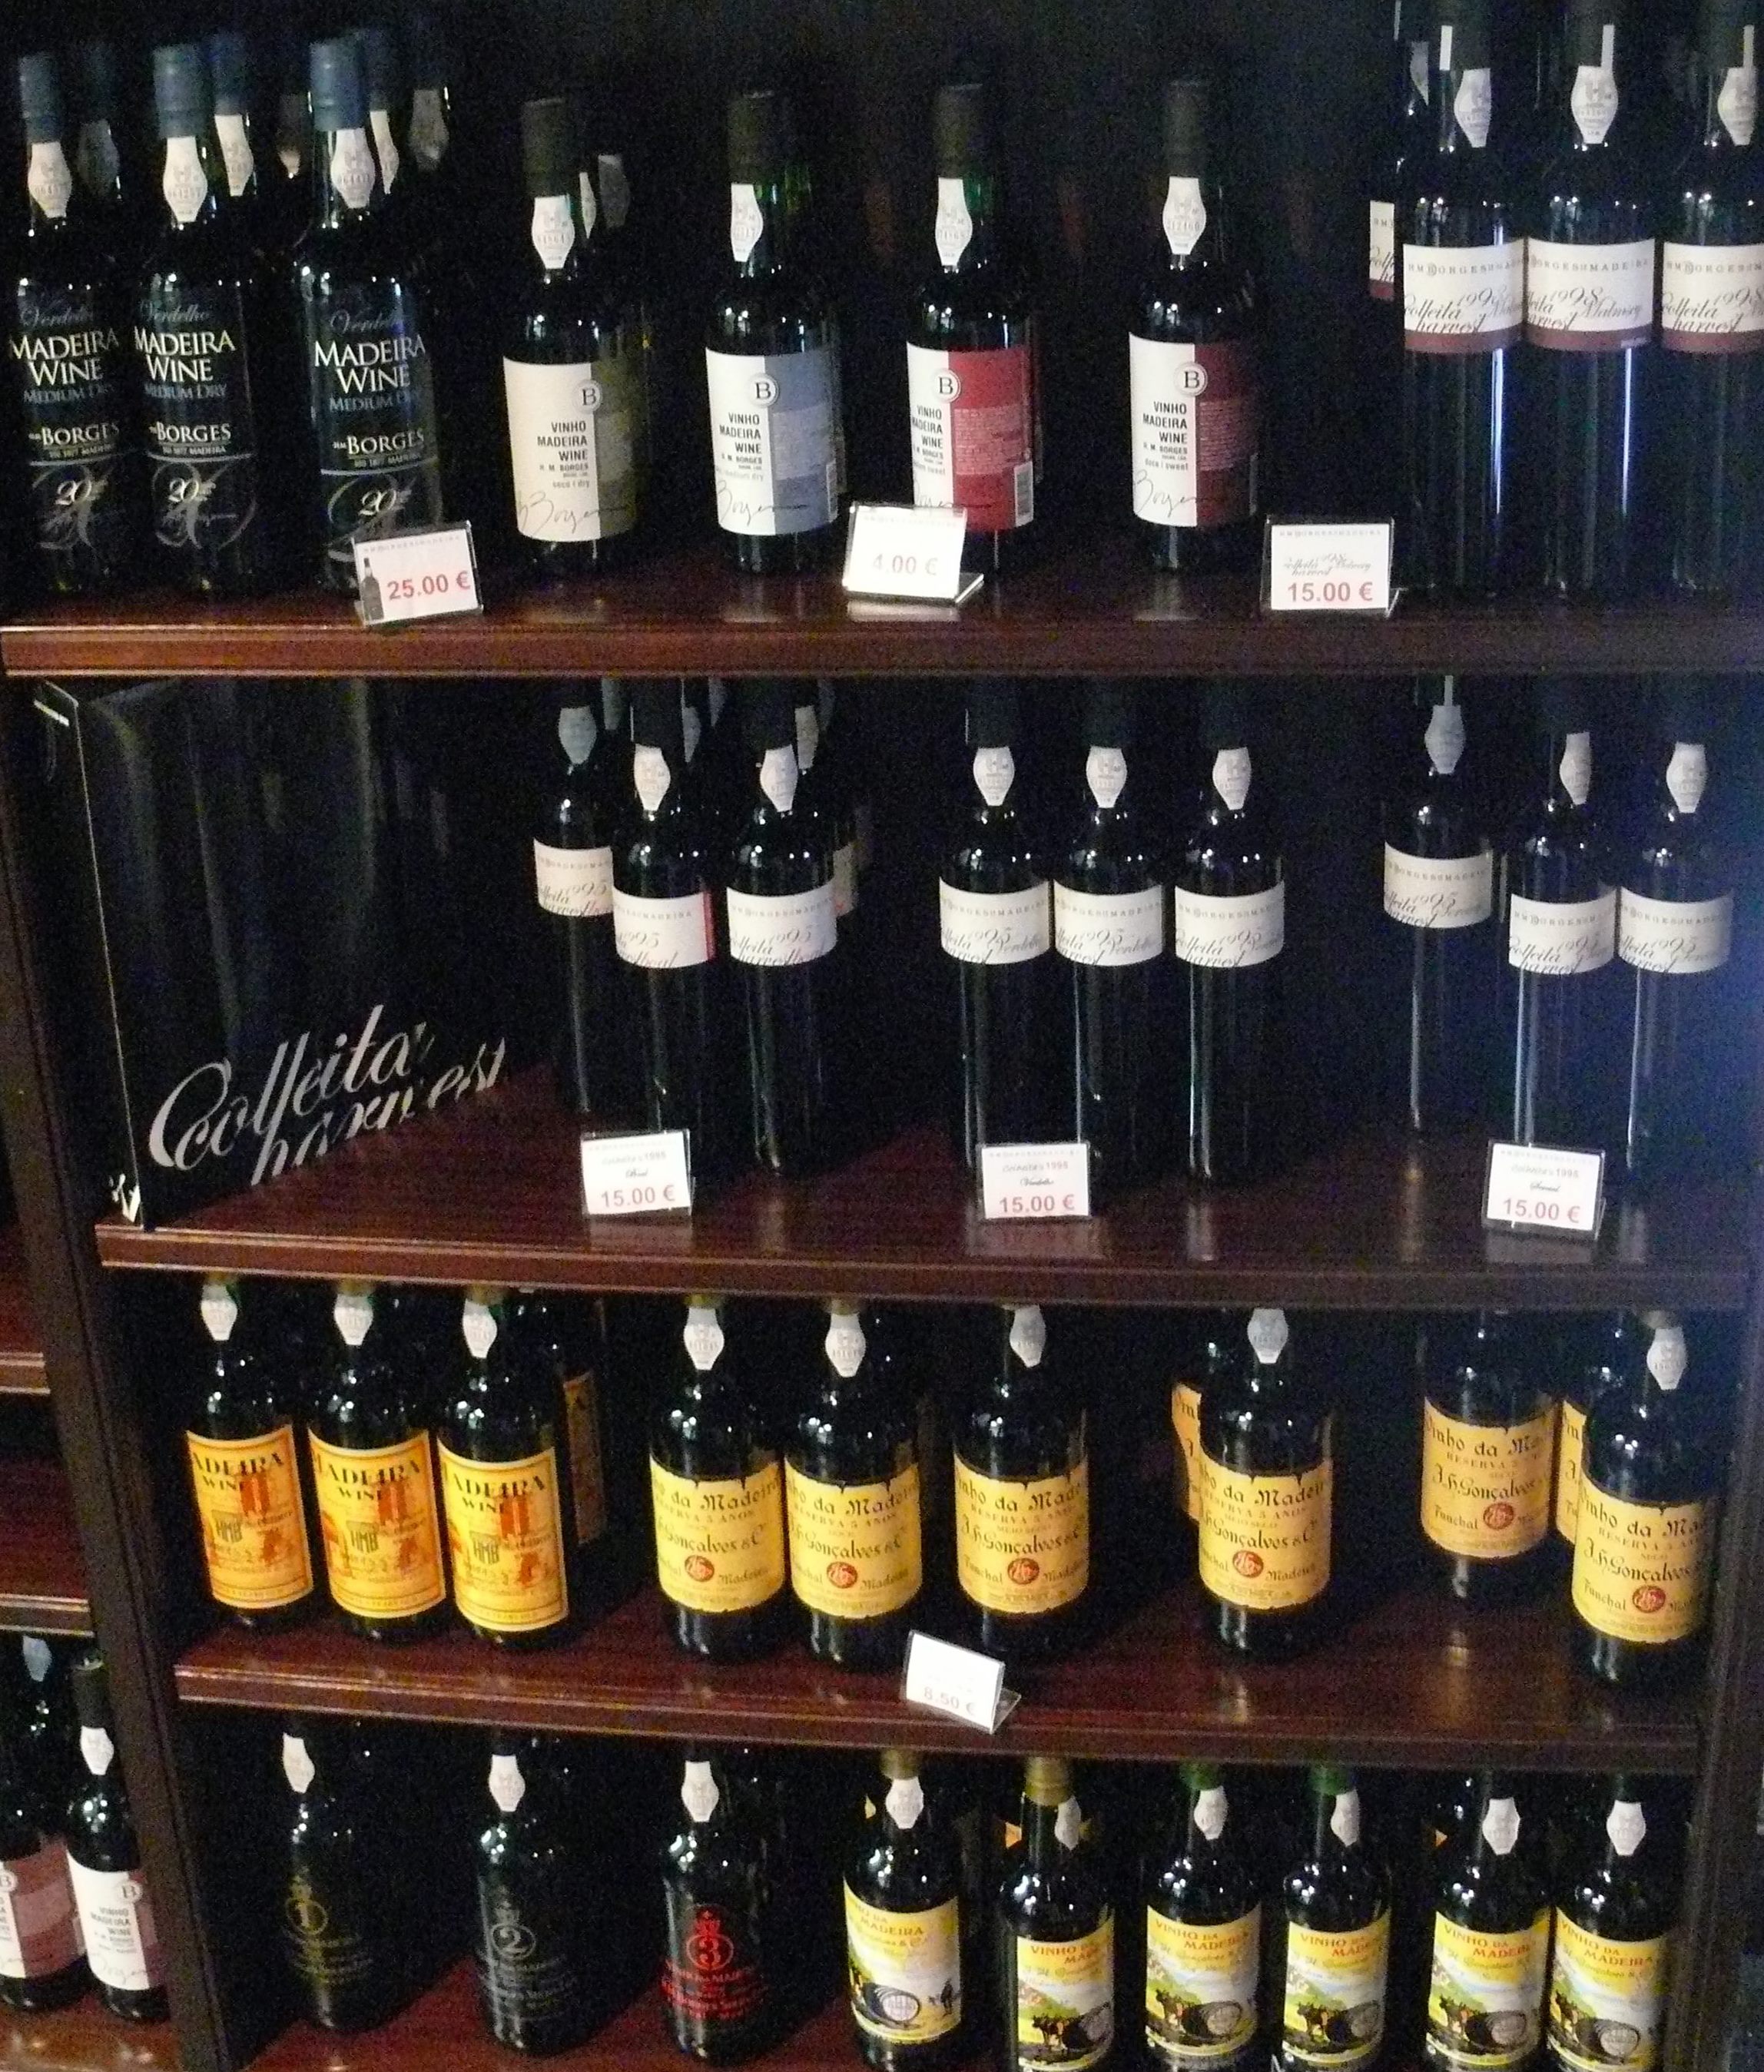 Borges shelves of madeira wine